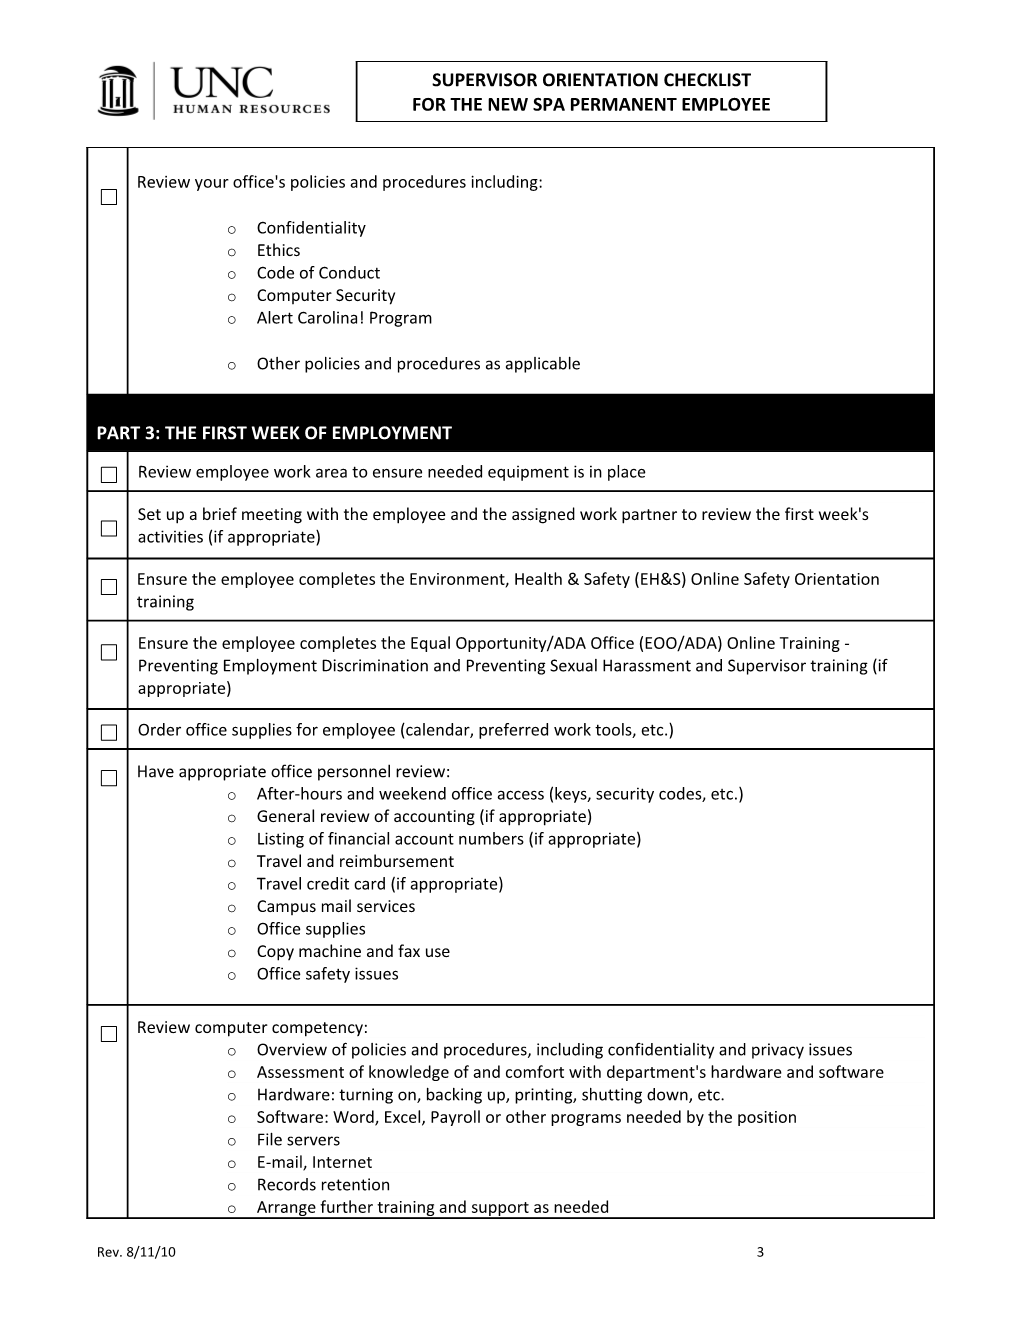 Orientation Checklist for Supervisors